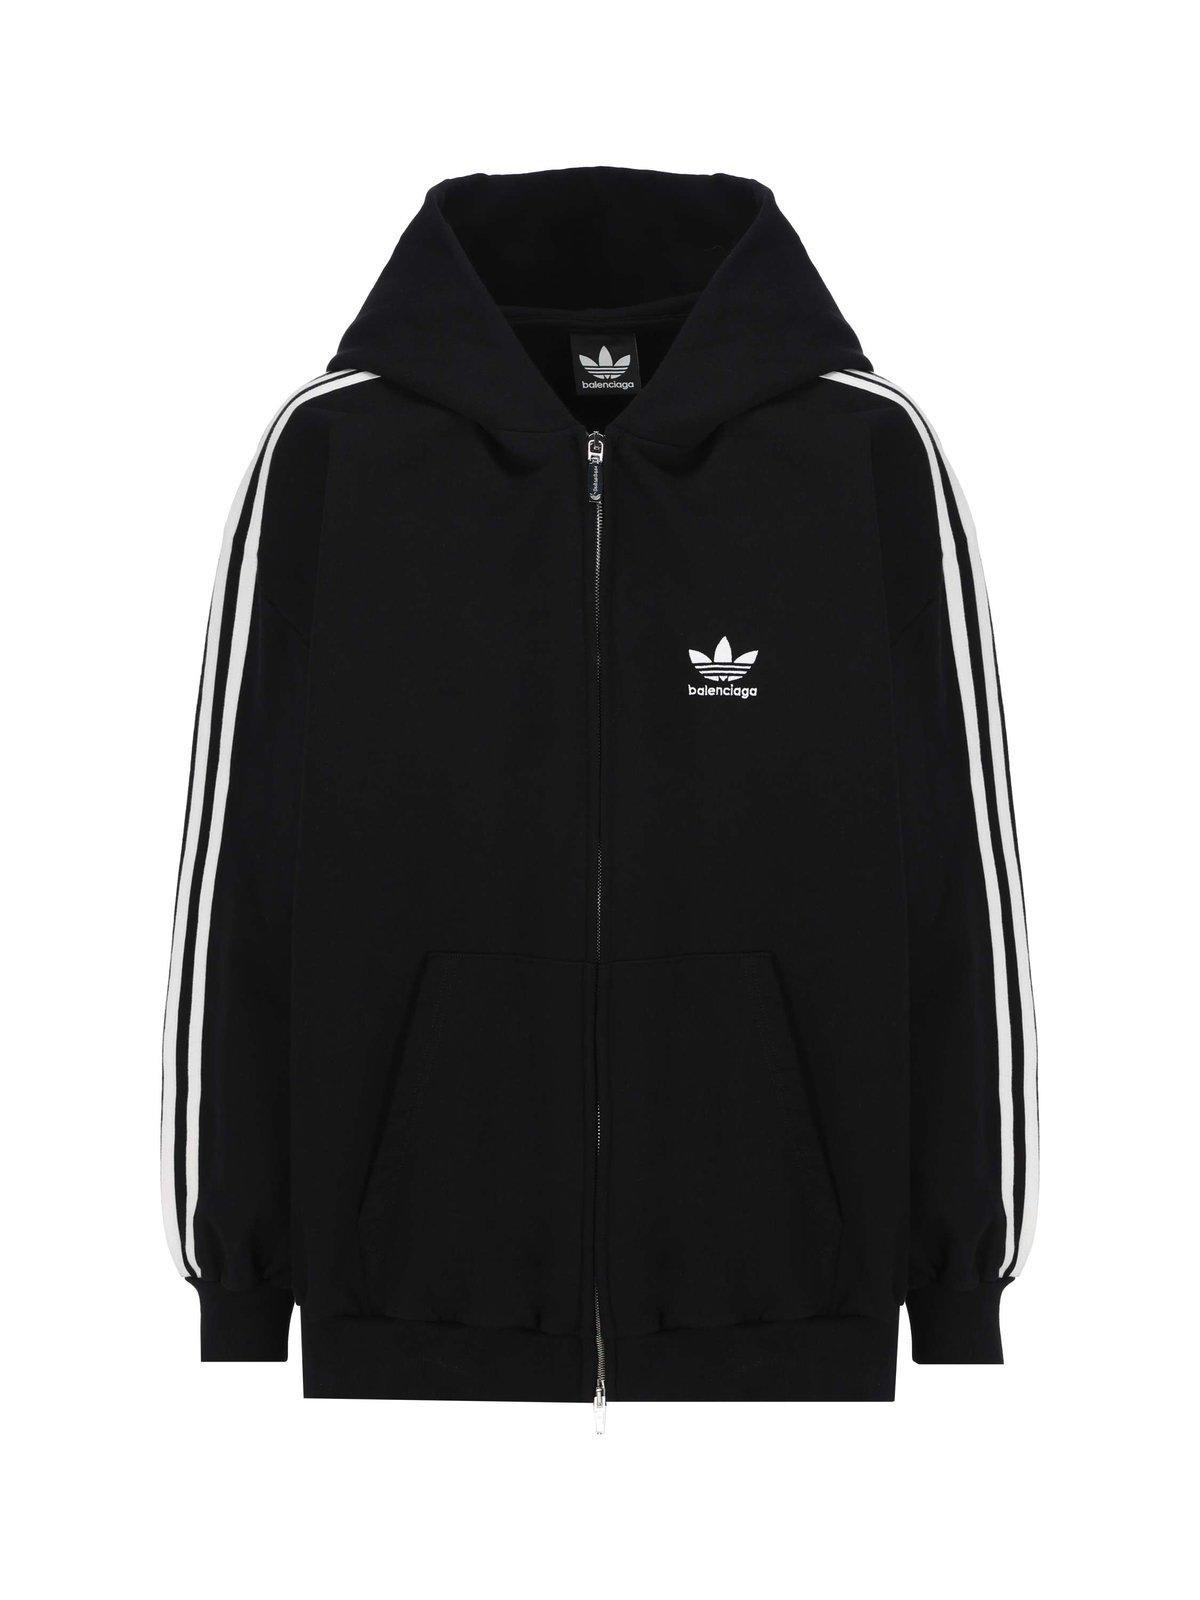 Balenciaga X Adidas Logo Printed Zipped Hoodie in Black | Lyst